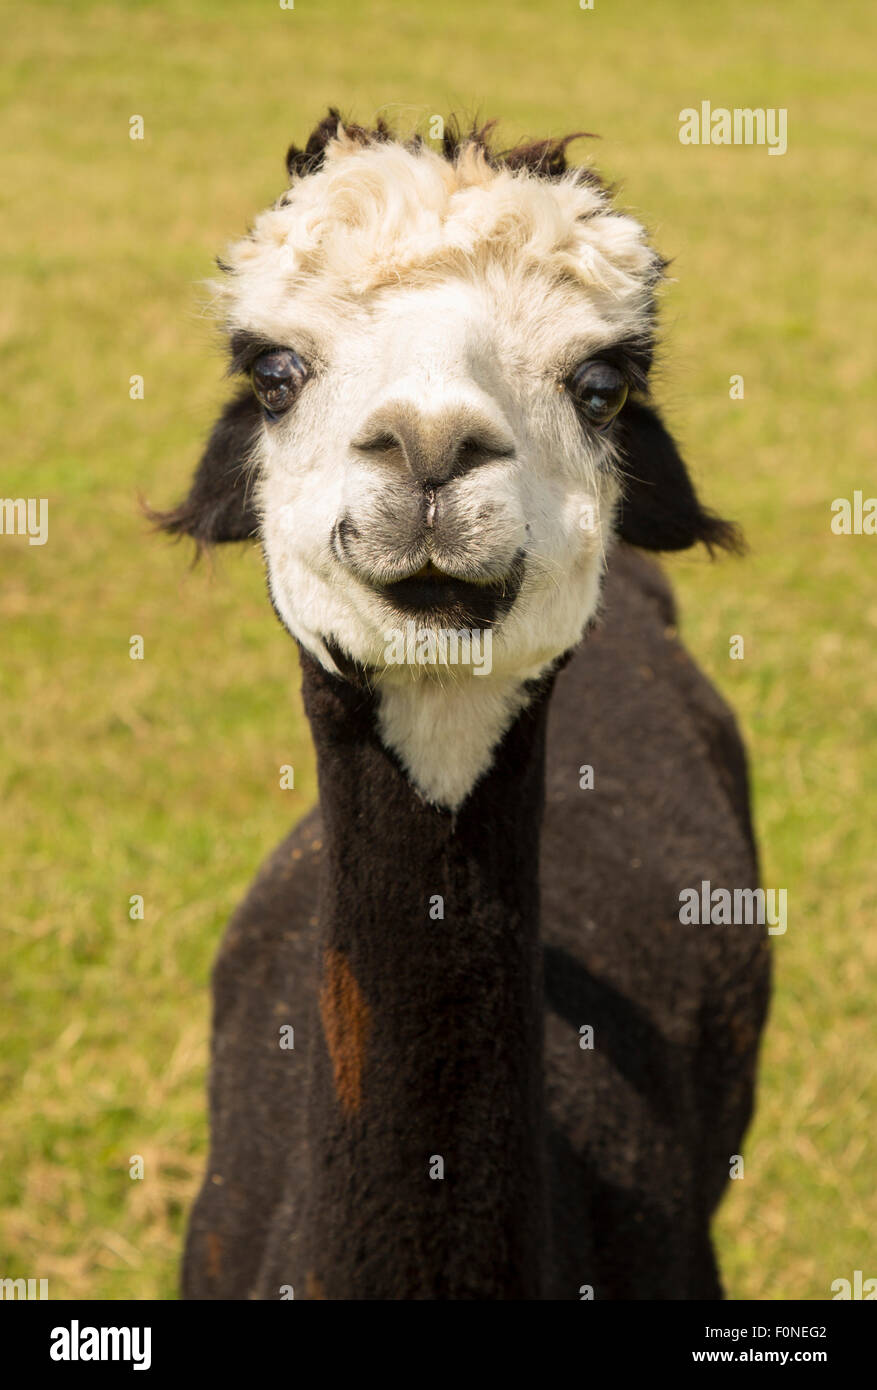 cute alpaca portrait on grass Stock Photo